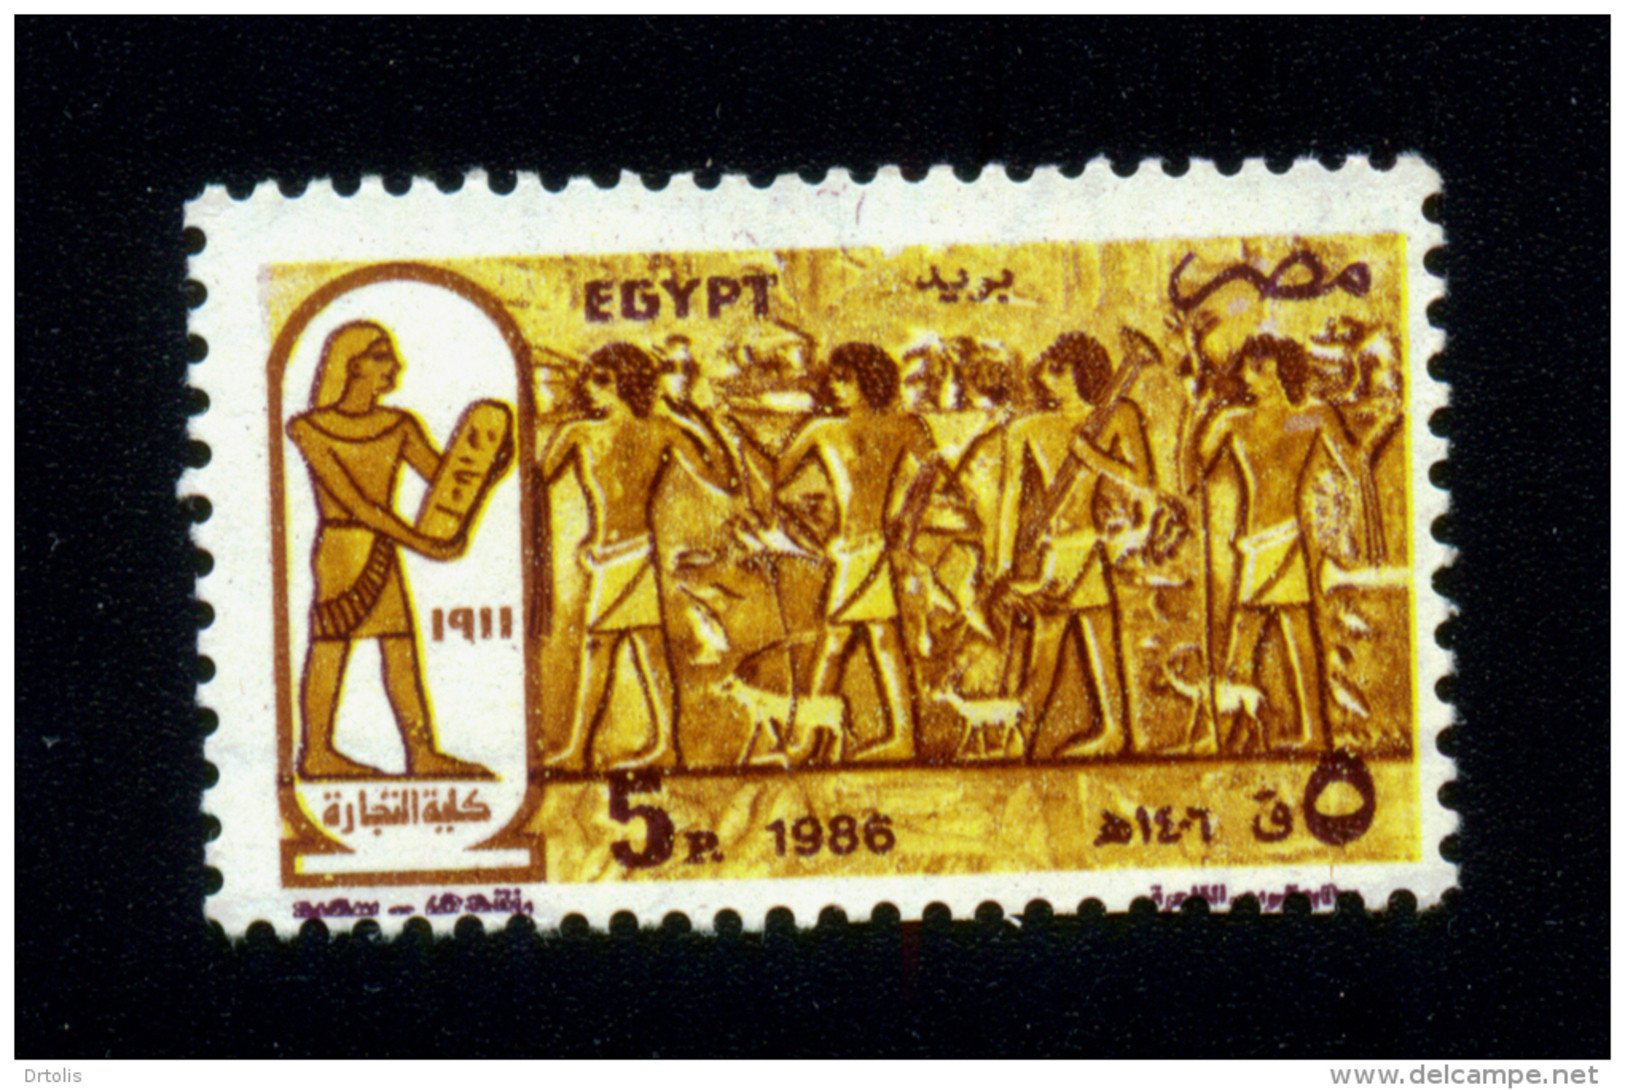 EGYPT / 1986 / FACULTY OF COMMERCE ; CAIRO UNIVERSITY / TOMB PAINTING ( BTAHHOTTEB ) ; SAKKARA / MNH / VF - Nuevos